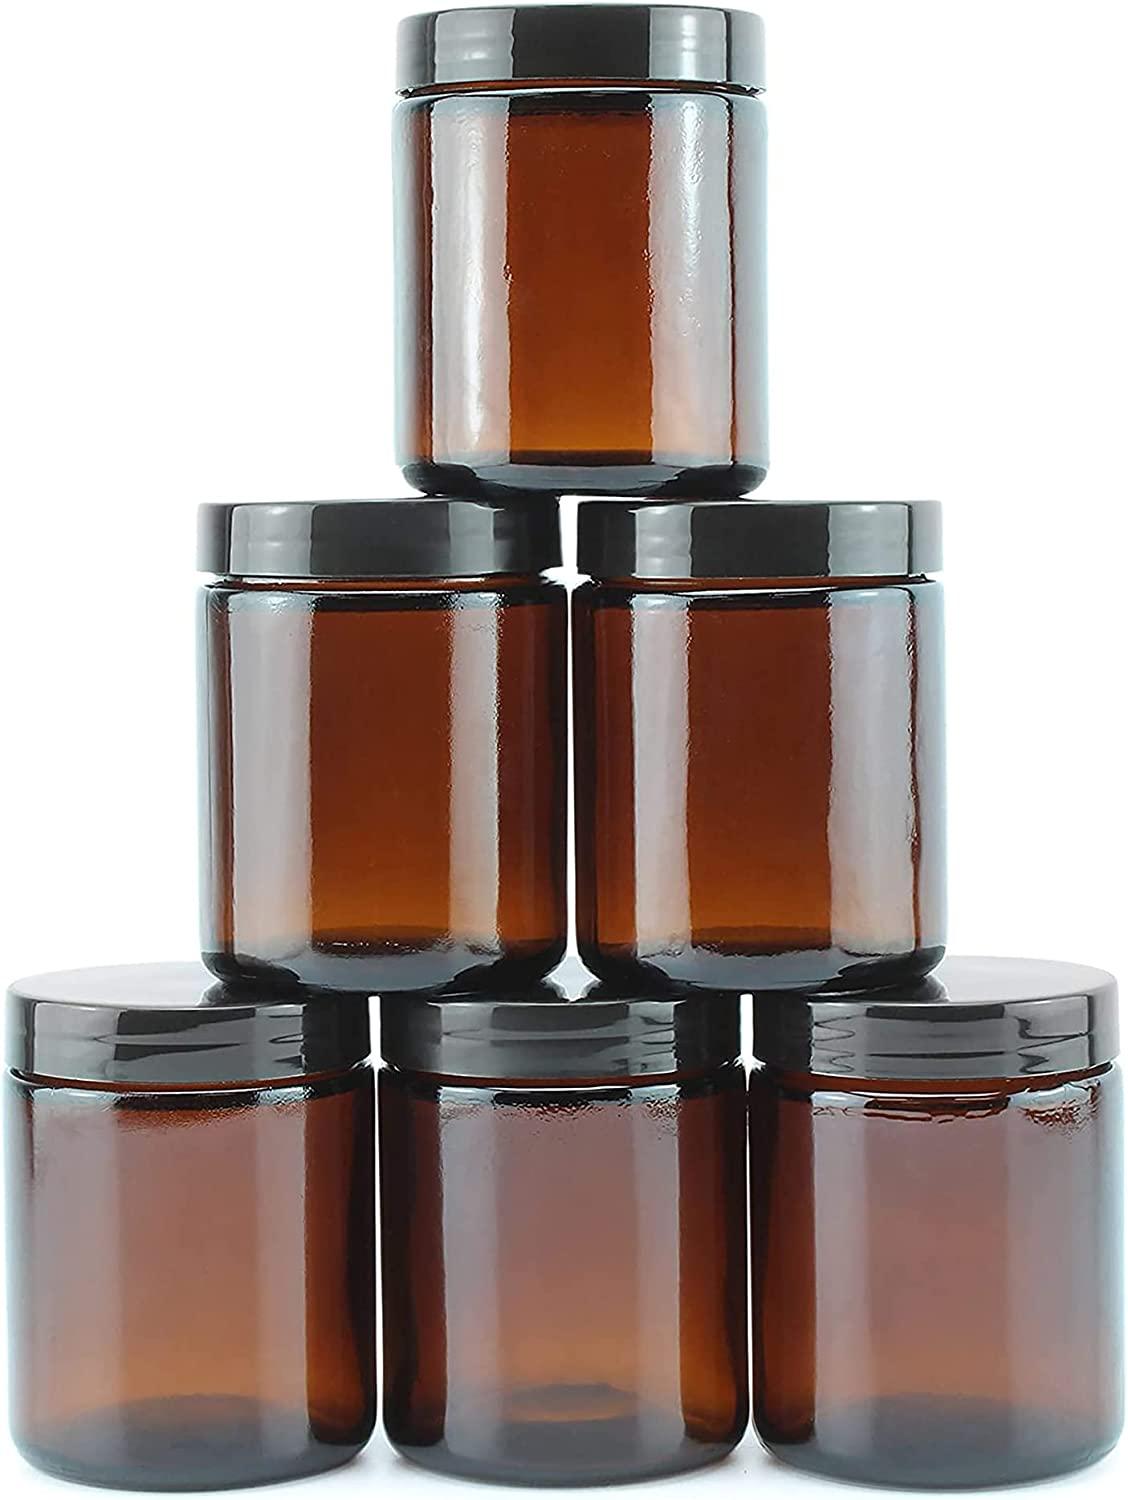 1 oz. Glass Salve Jar - AromaTools®